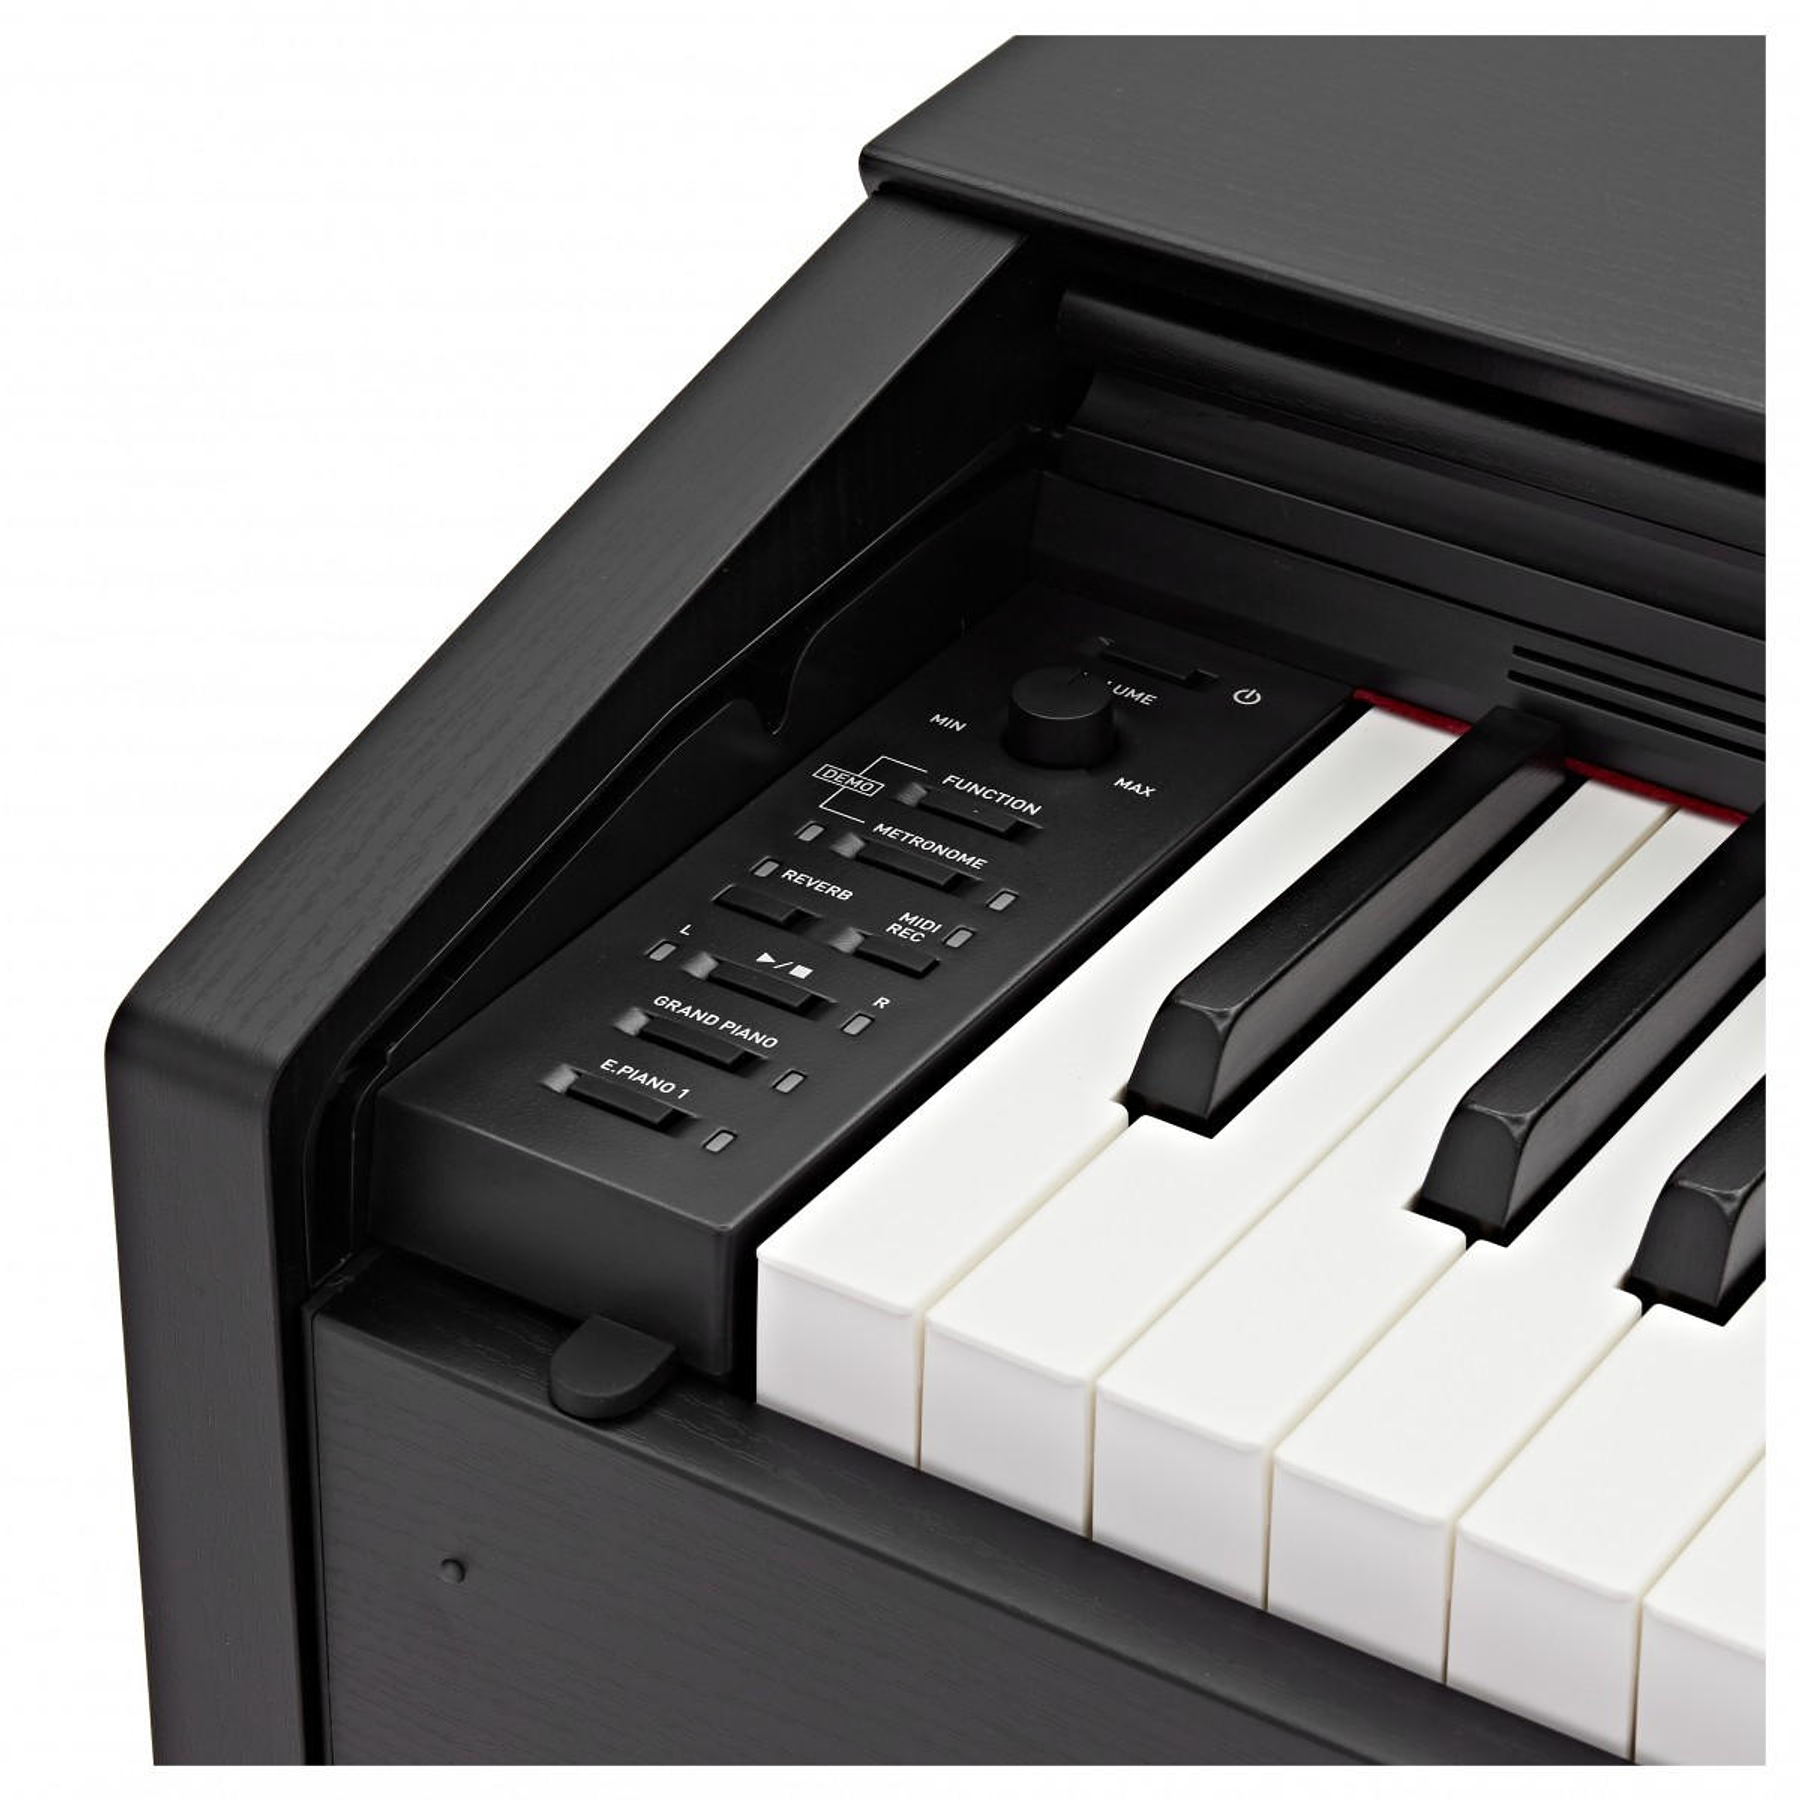 Piano Digital Casio Privia PX-770BK